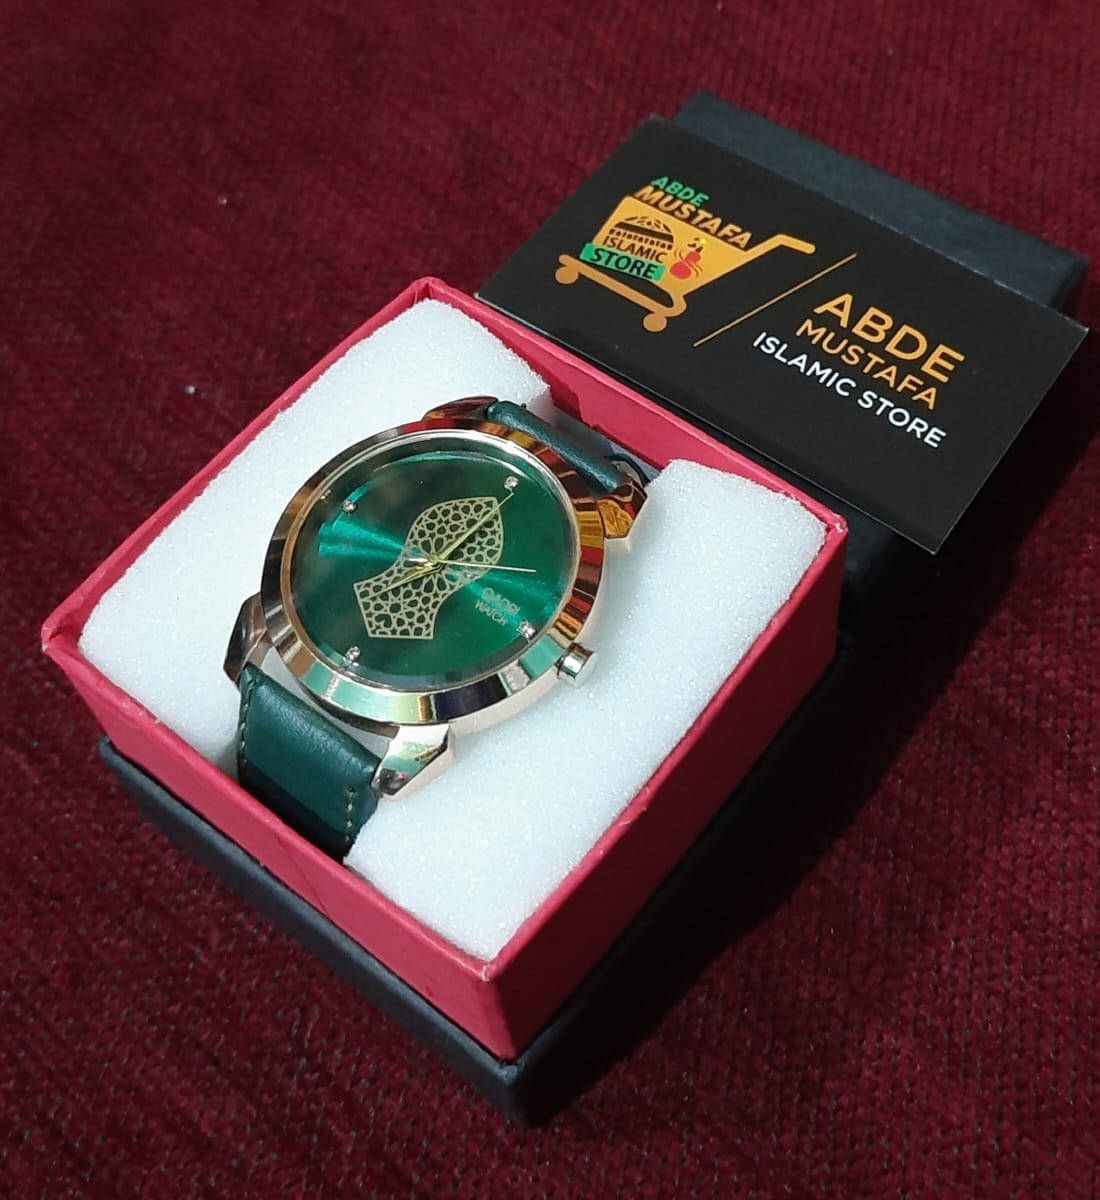 Nalain Paak Qadri Watch Exclusive Design By Abde Mustafa Store (Model No. 1111)